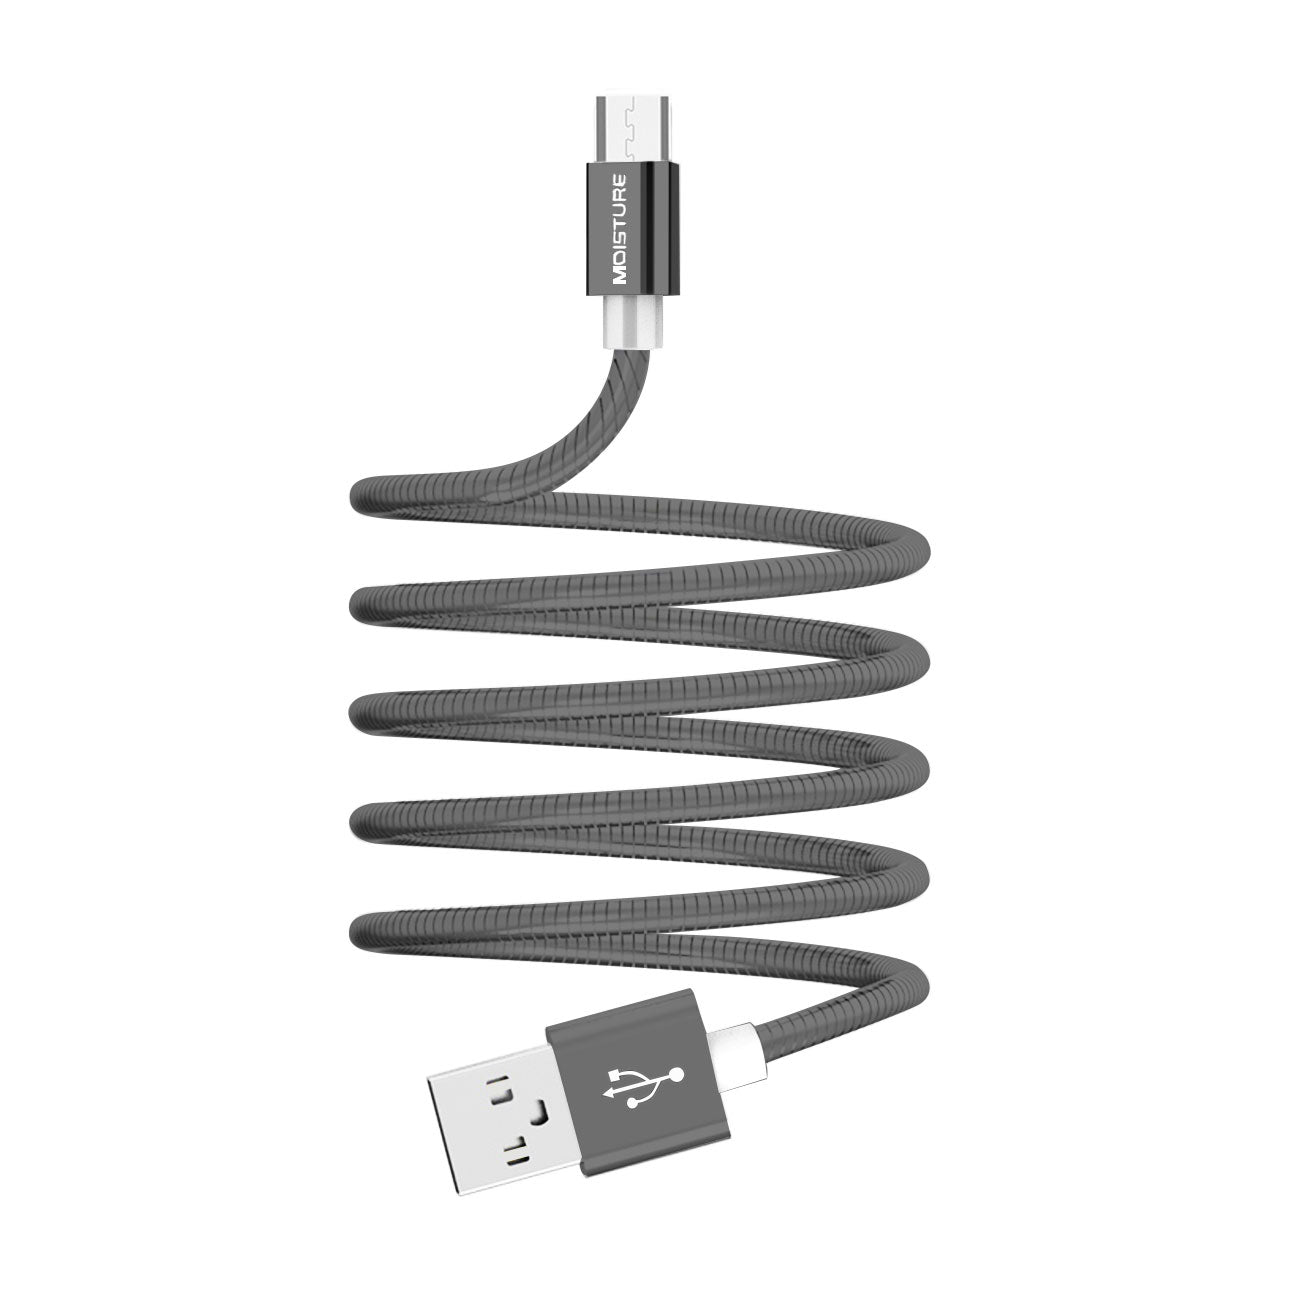 Moisture 2.6A Premium Full Hi-Speed Data Cable In Gray